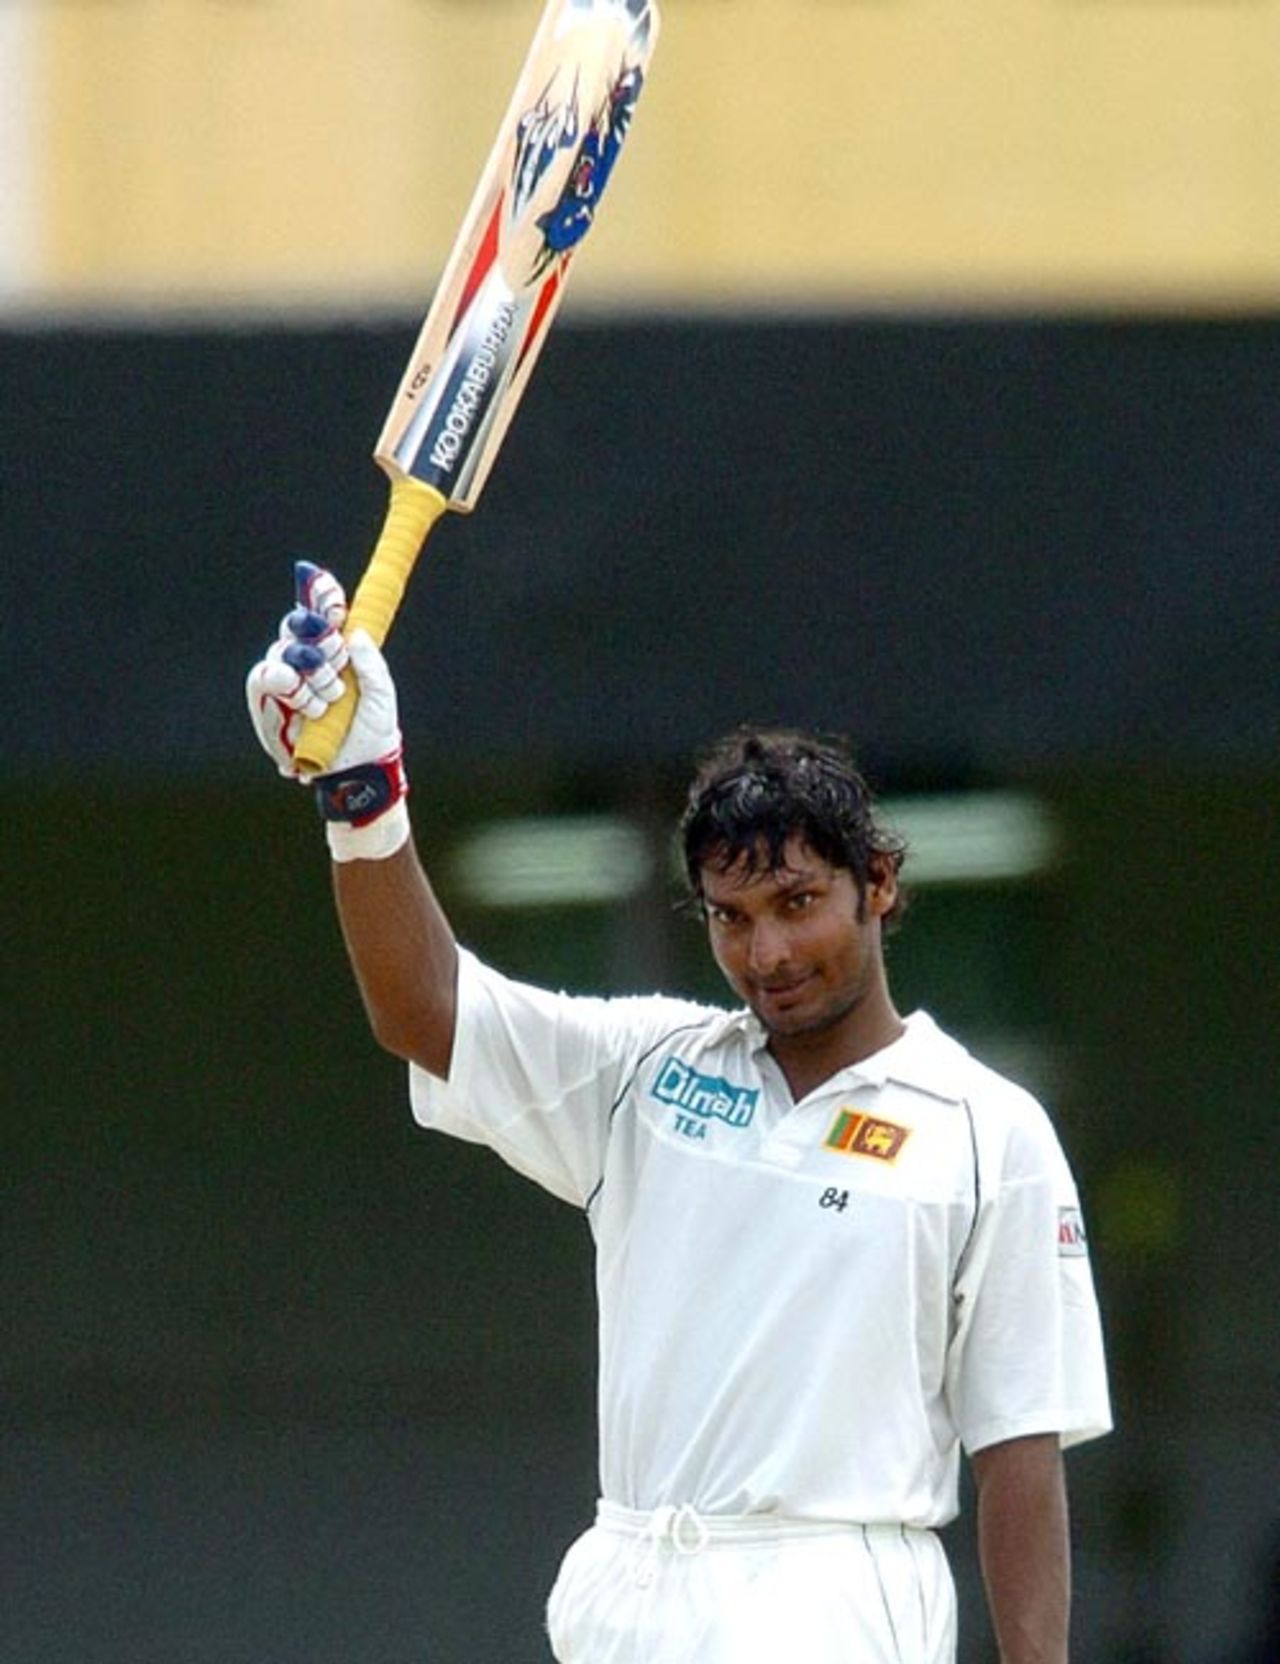 Kumar Sangakkara acknowledges the cheers after reaching his 13th Test hundred, Sri Lanka v Bangladesh, 2nd Test, P Saravanamuttu Stadium, Colombo, 2nd day, July 4, 2007 
